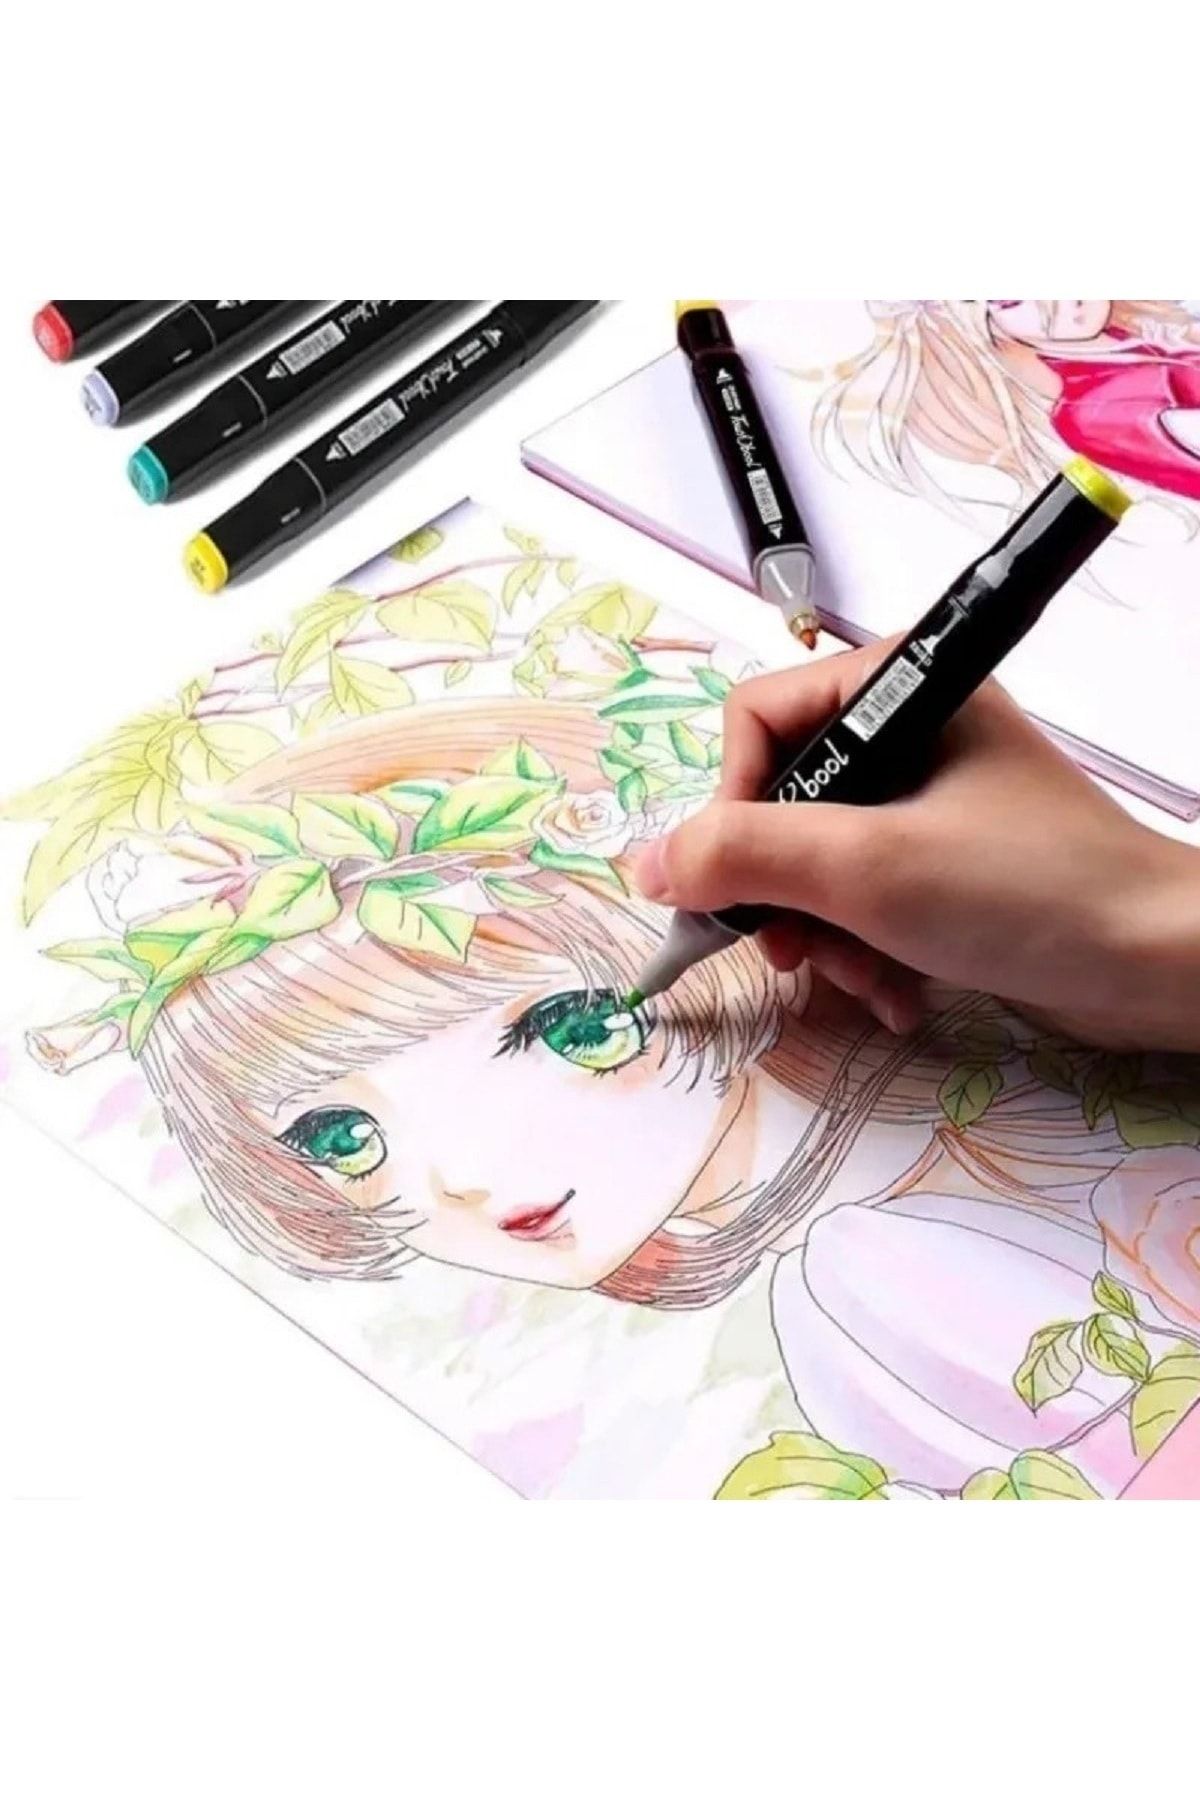 DOUBLE LINE SILVER Anime Pens Art Crafting Supplies DIY Art Pens Set for  Artists $10.73 - PicClick AU